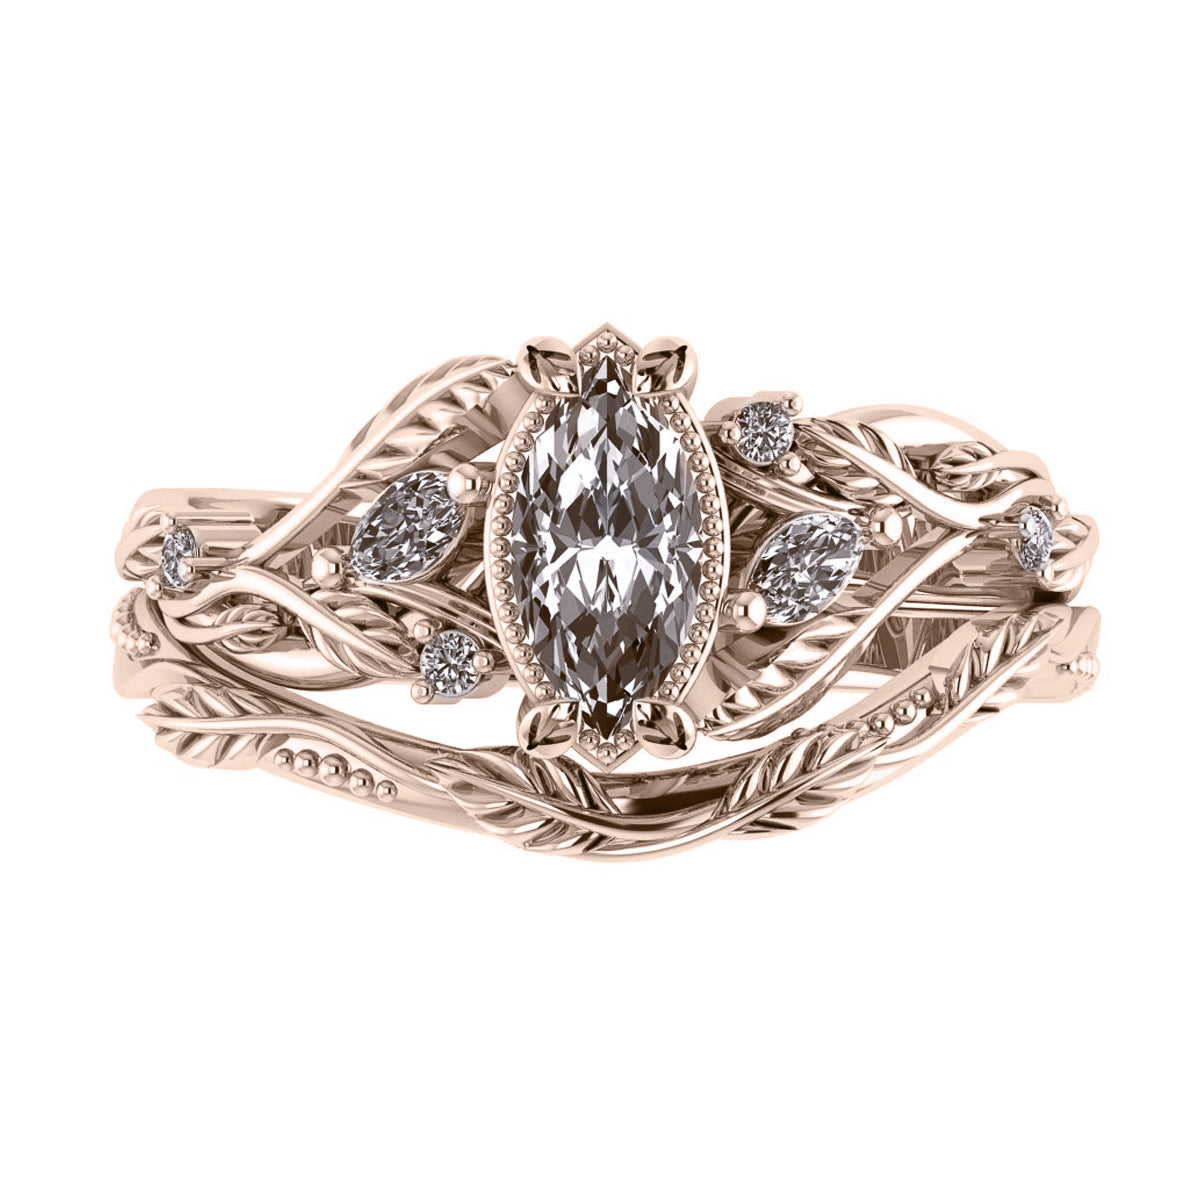 Patricia asymmetric | custom bridal ring set for marquise cut gemstone 8x4 mm - Eden Garden Jewelry™